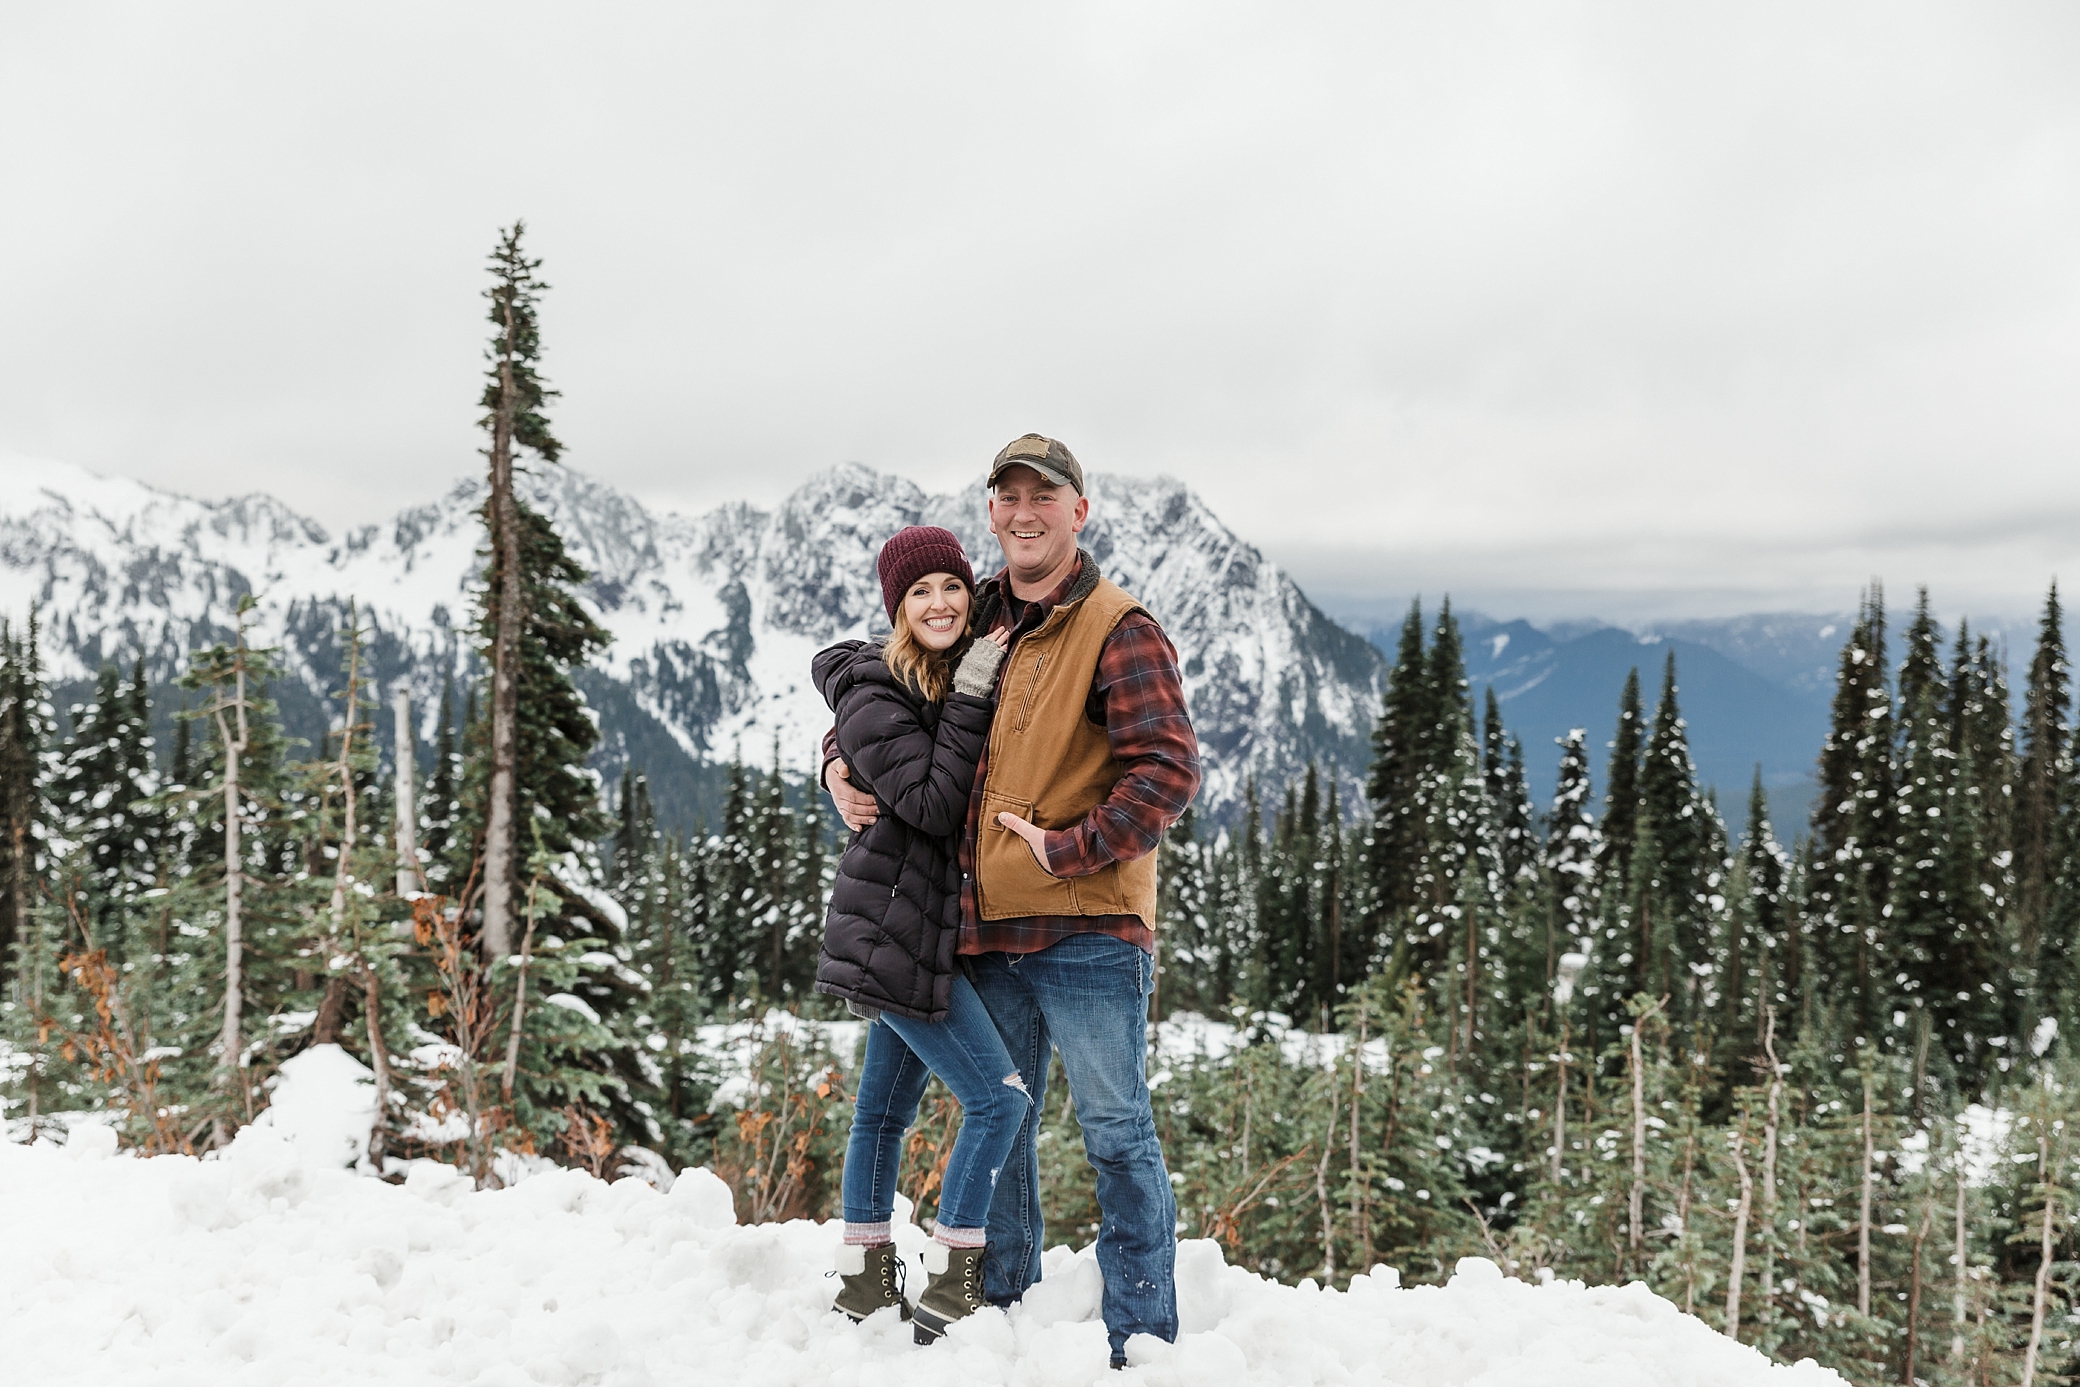 Mount Rainier Couples Photoshoot | Megan Montalvo Photography 